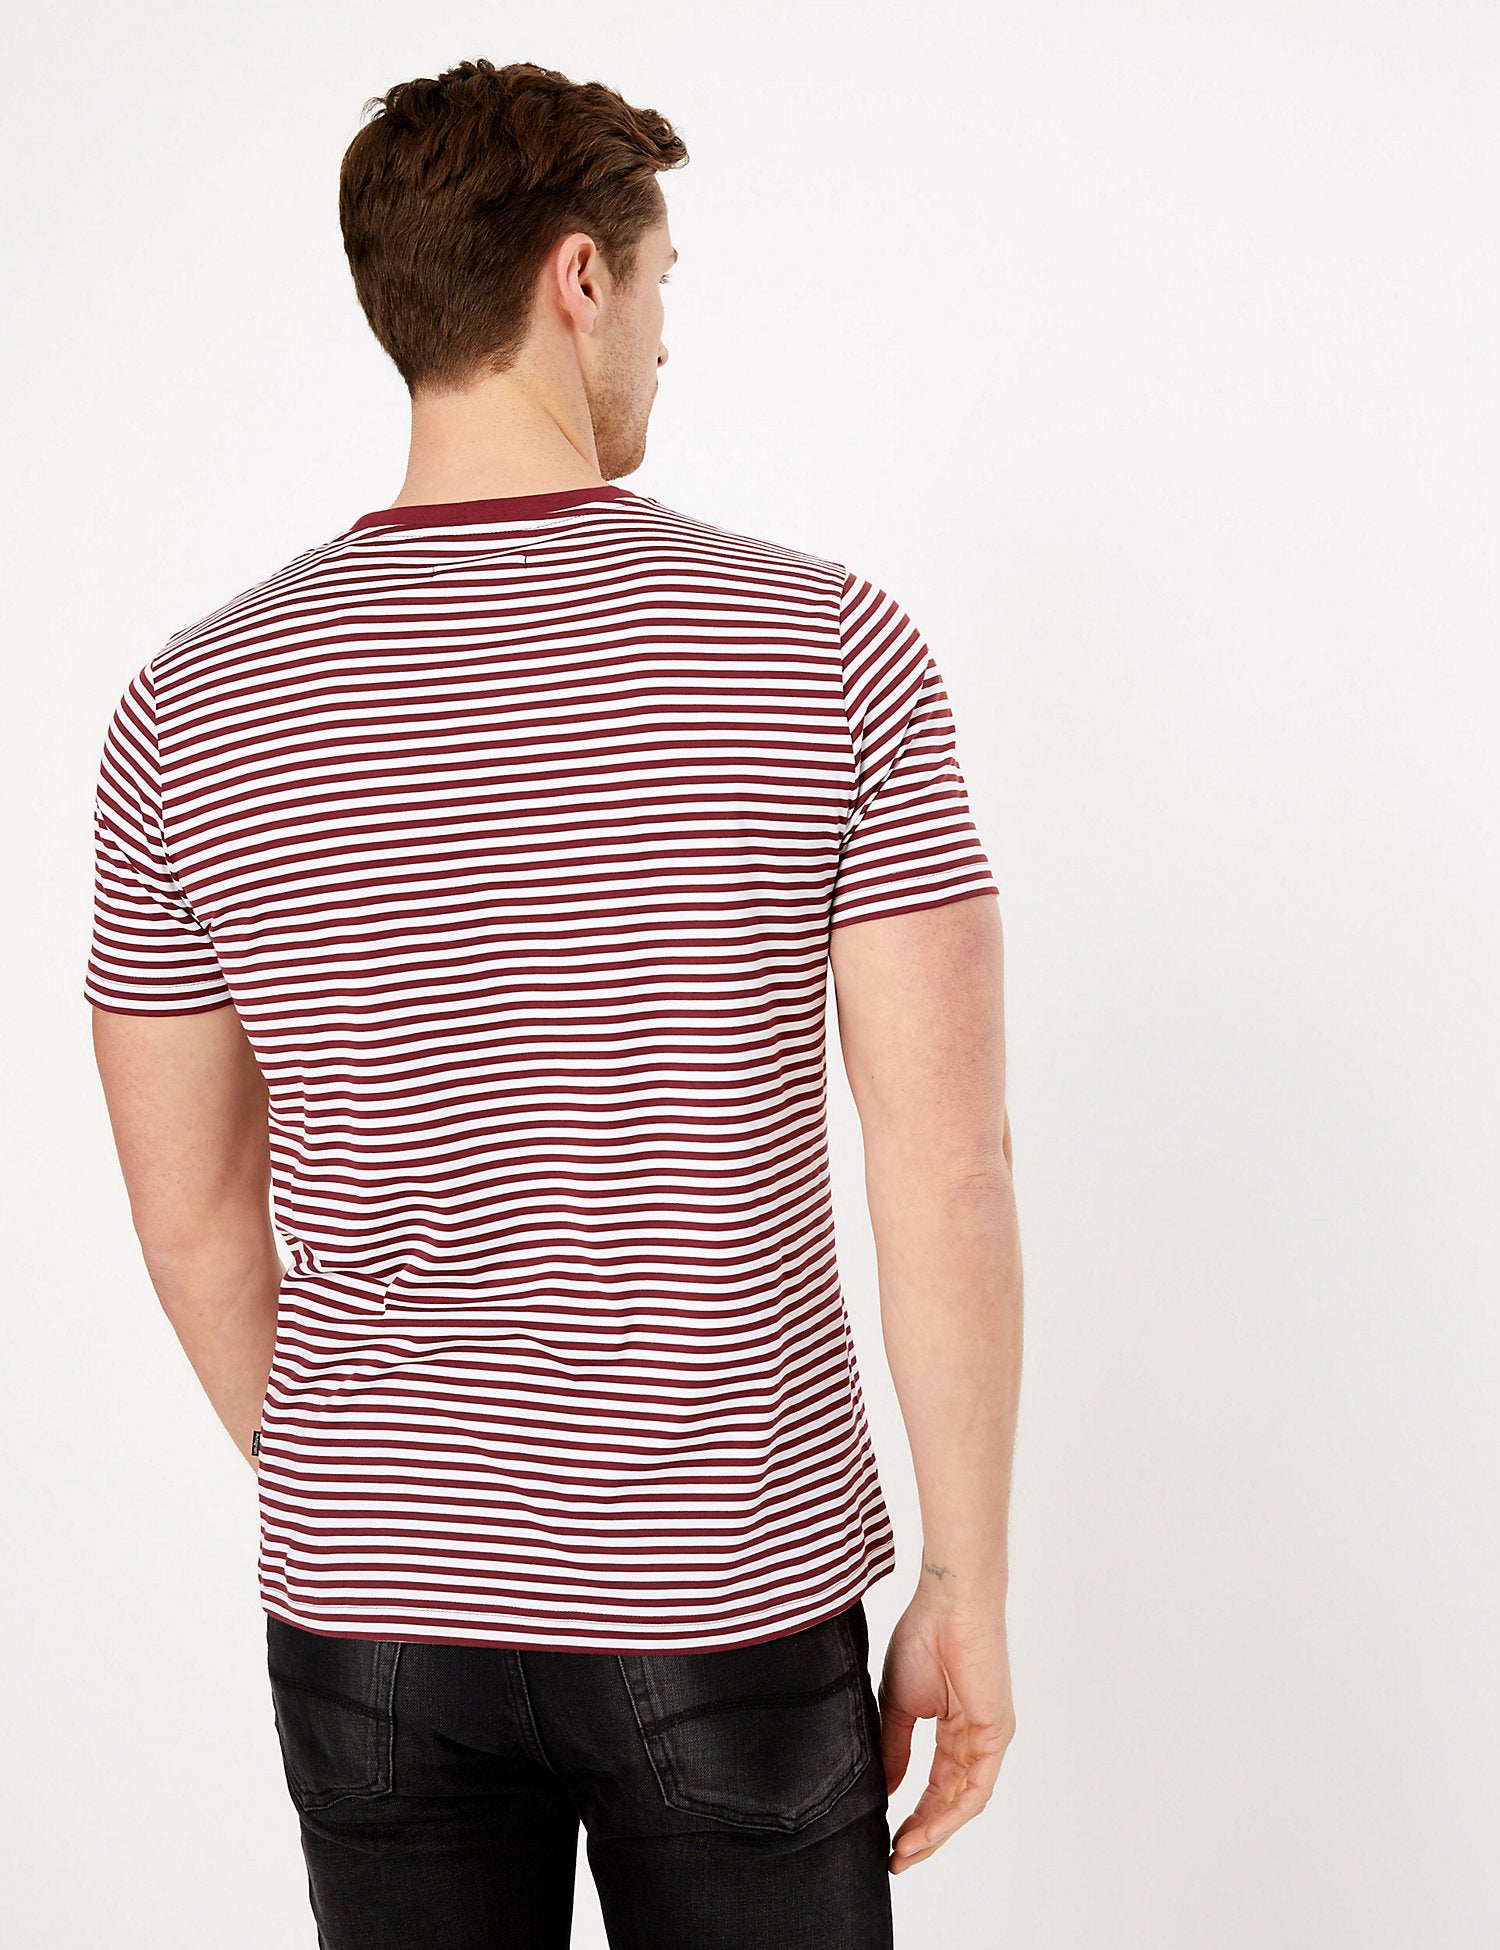 Premium Cotton Striped T-Shirt